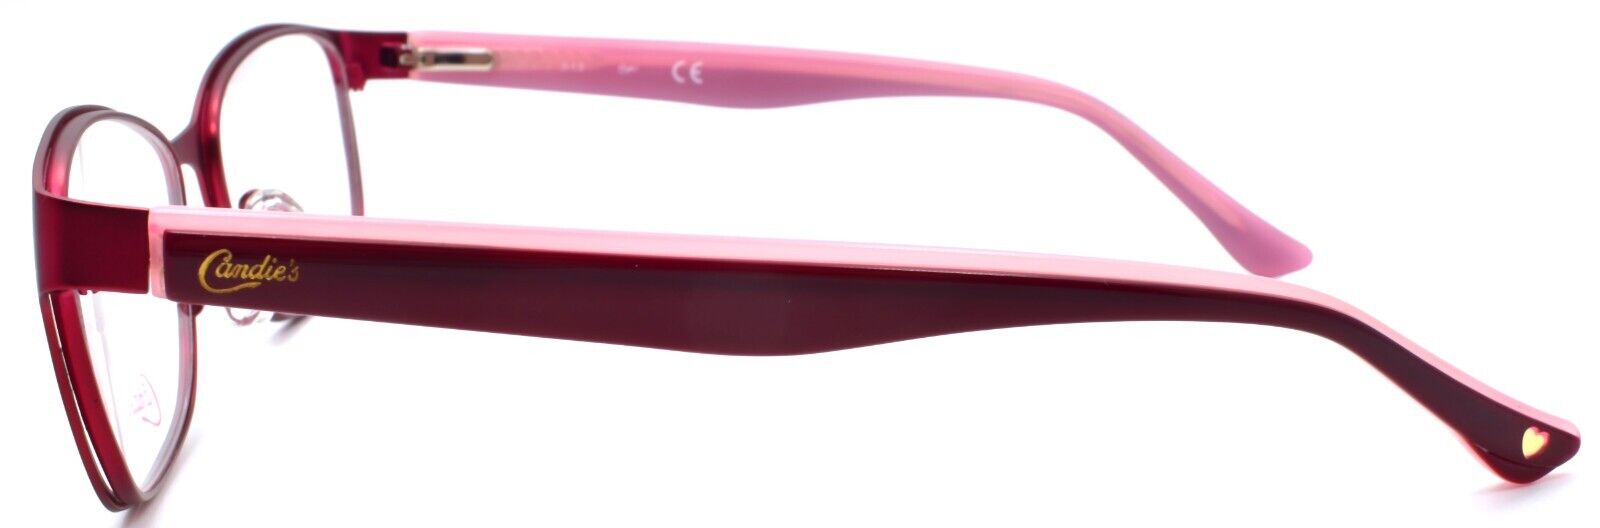 3-Candies CA0135 068 Women's Eyeglasses Frames 53-17-135 Red / Pink-664689814787-IKSpecs